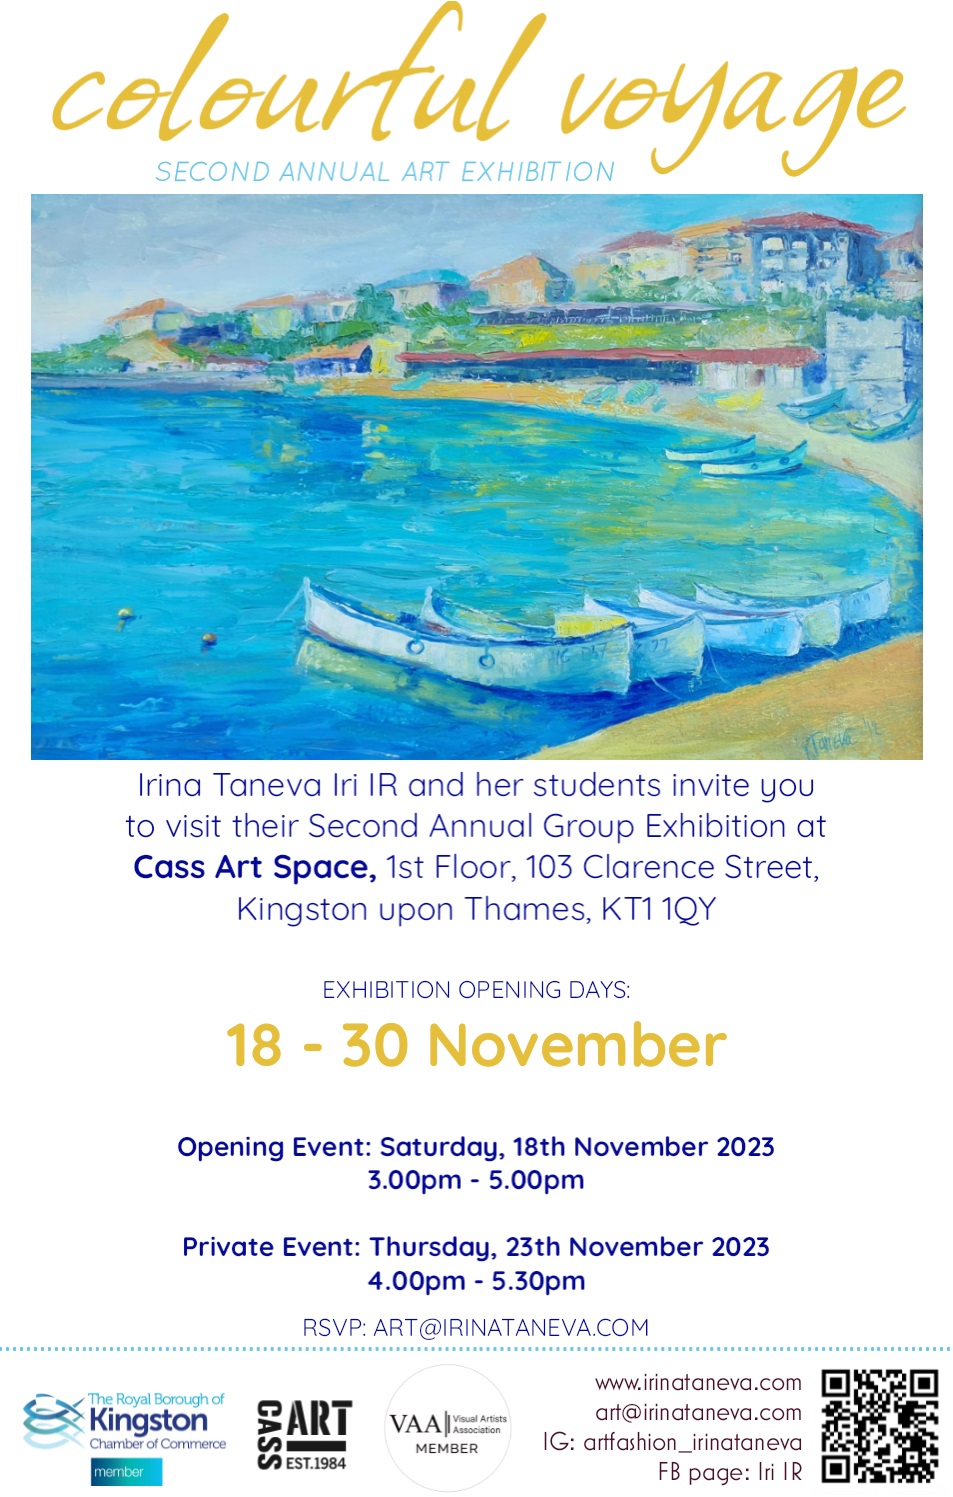 exhibition artist irina taneva and students London Kingston Cass Art Space November 2023